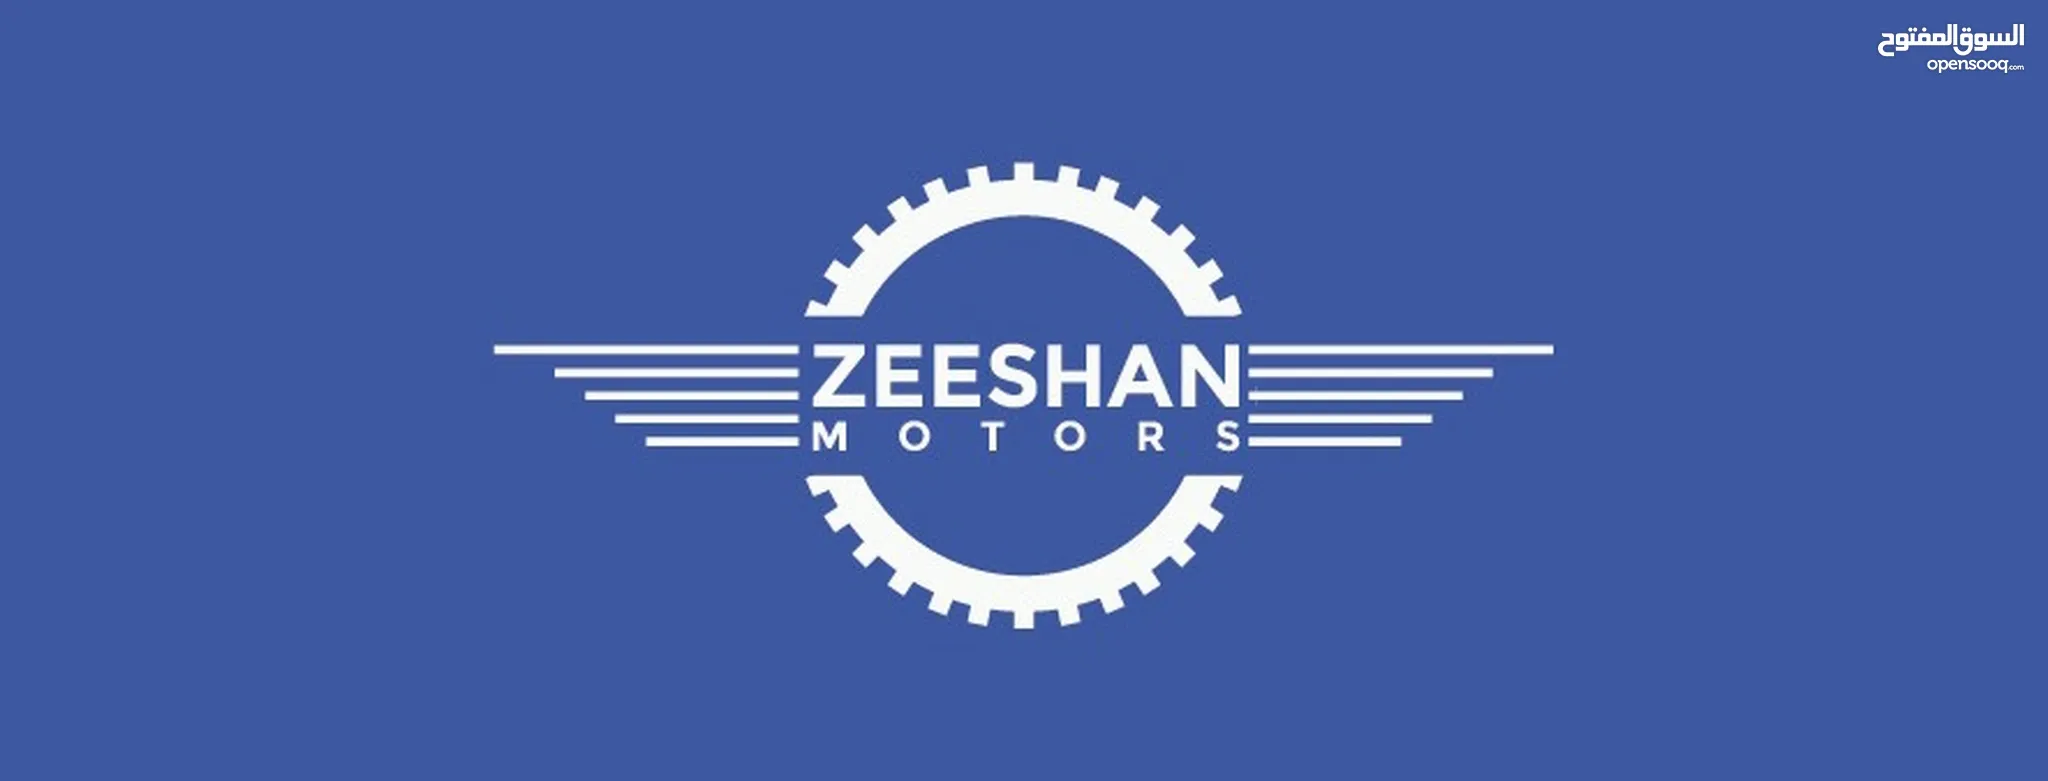 Zeeshan Motors